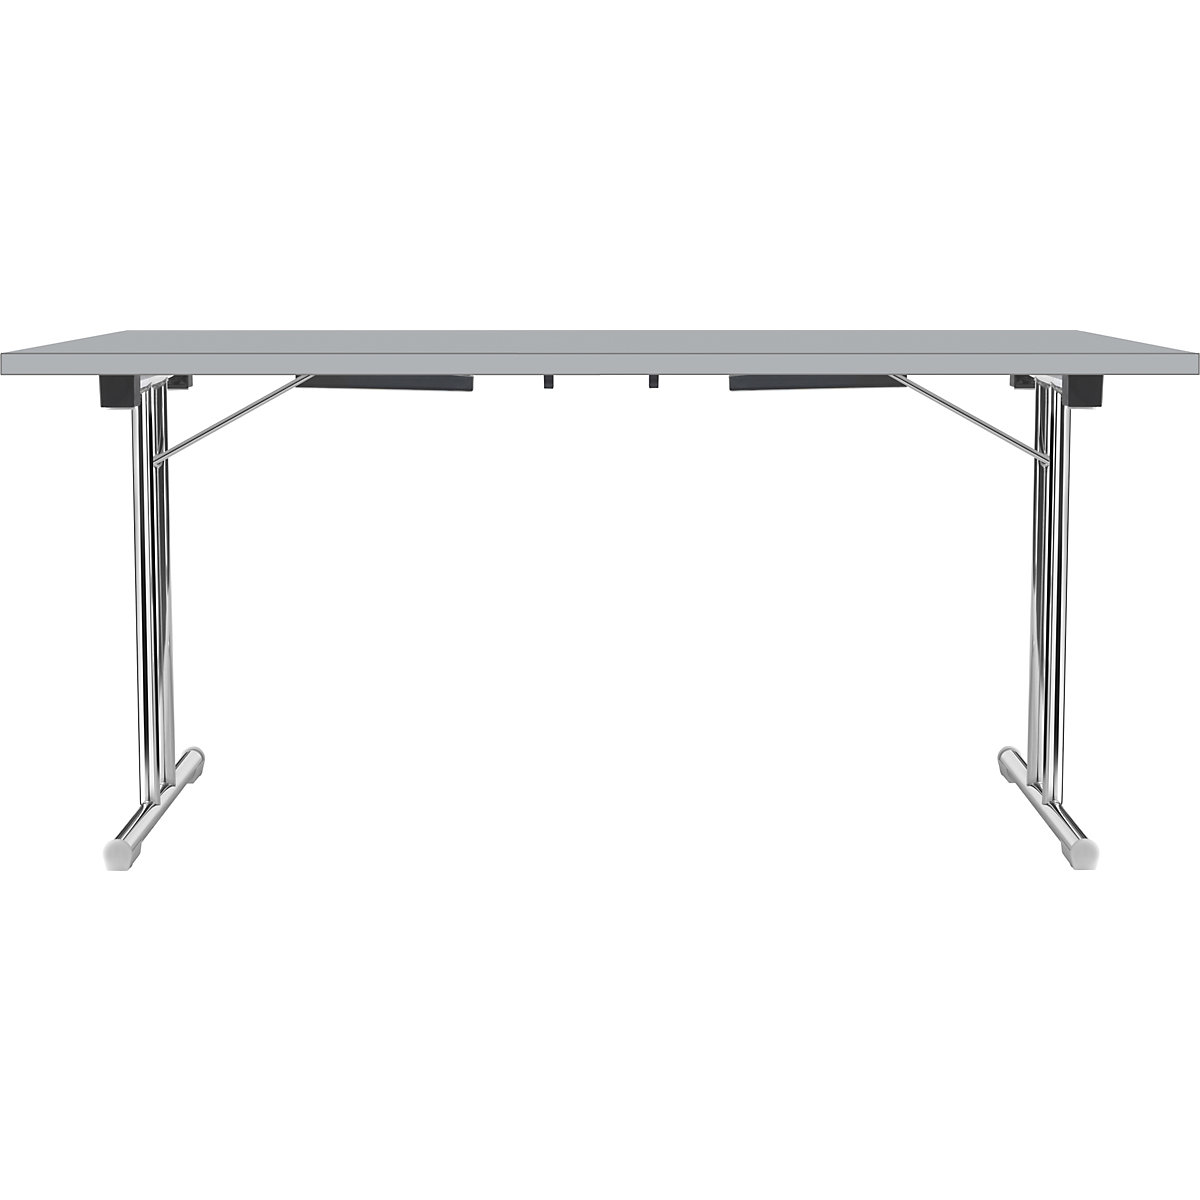 Folding table with double T base, tubular steel frame, chrome plated, light grey/light grey, WxD 1400 x 700 mm-16